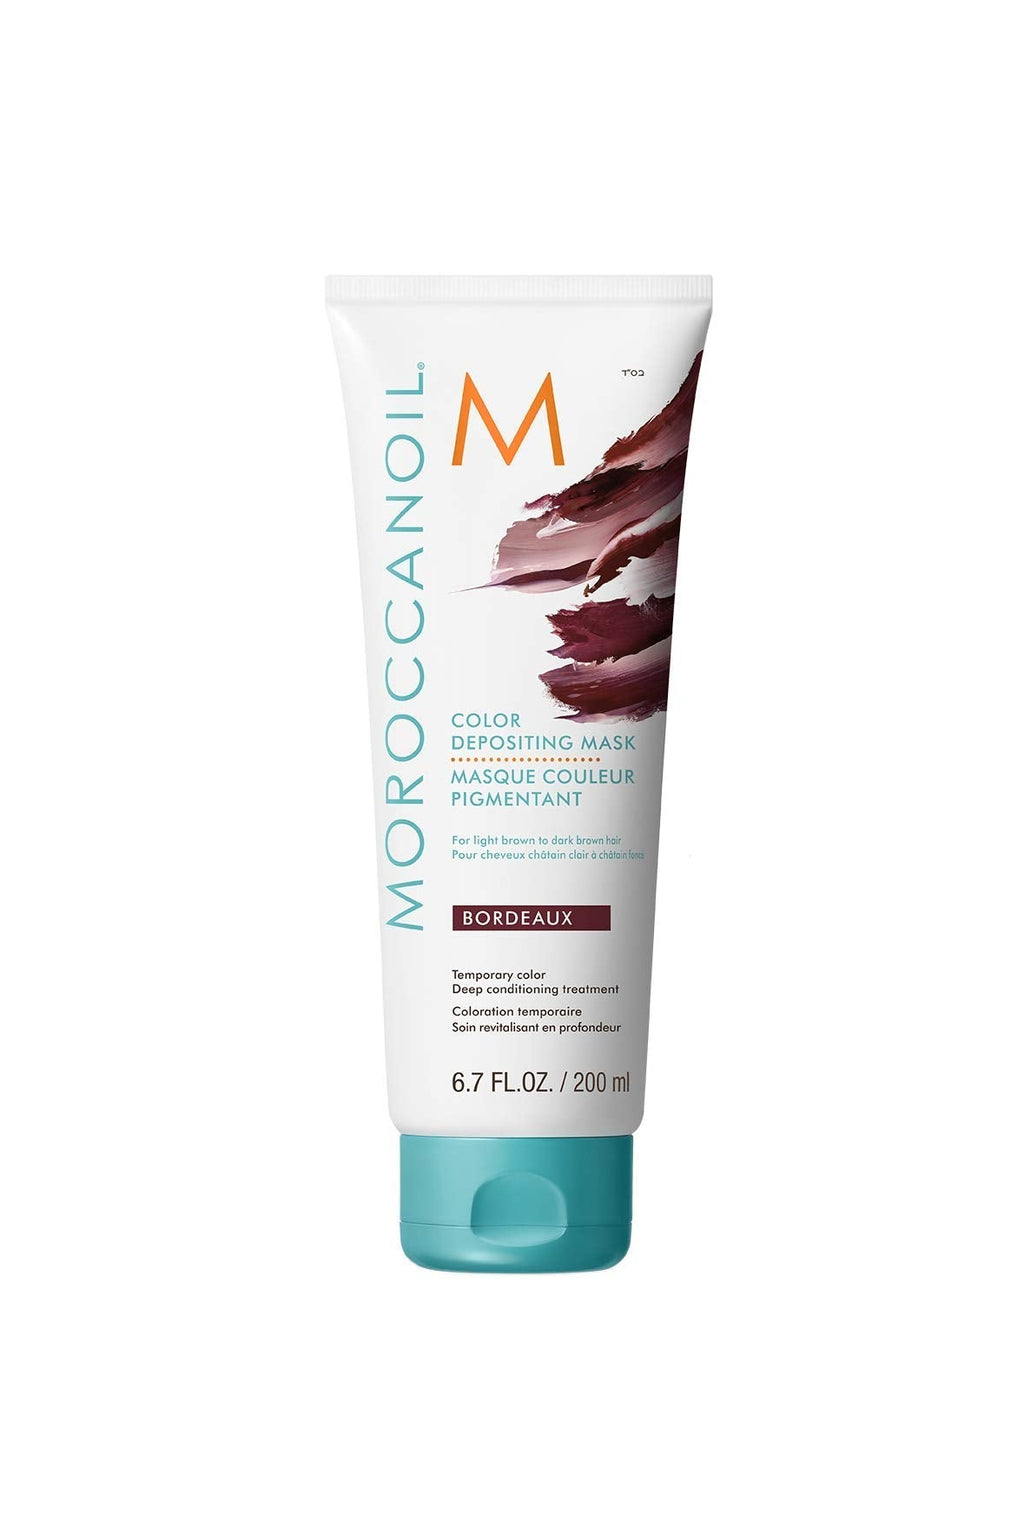 [Australia] - Moroccanoil Colour Depositing Hair Mask Bordeaux, 200ml 